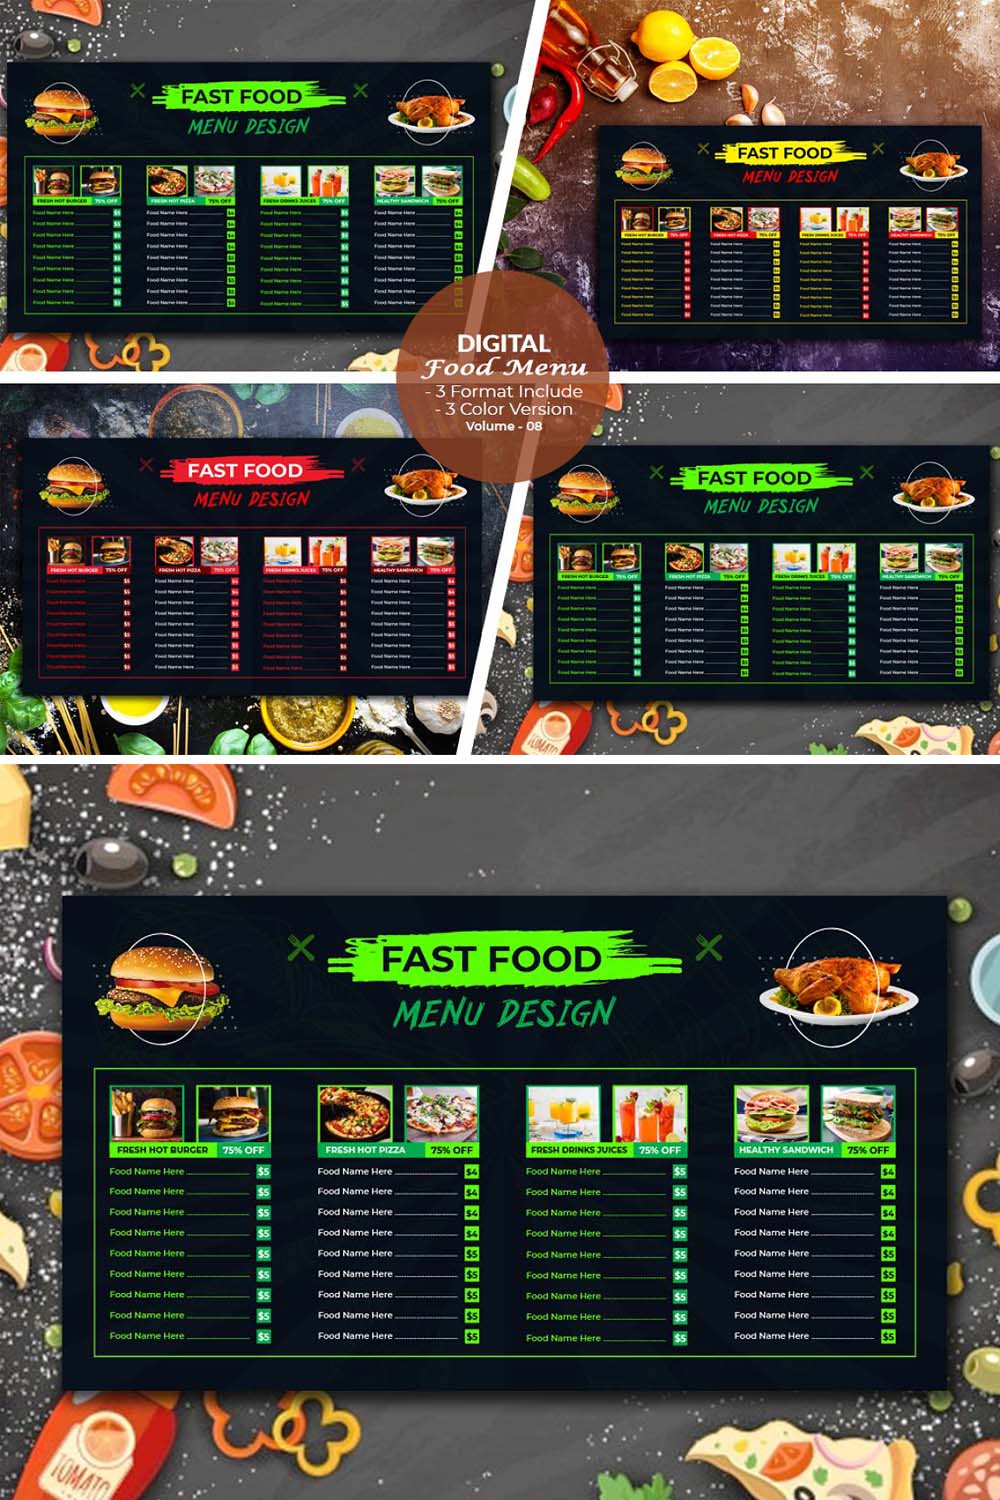 Digital Fast Food Menu Template pinterest preview image.